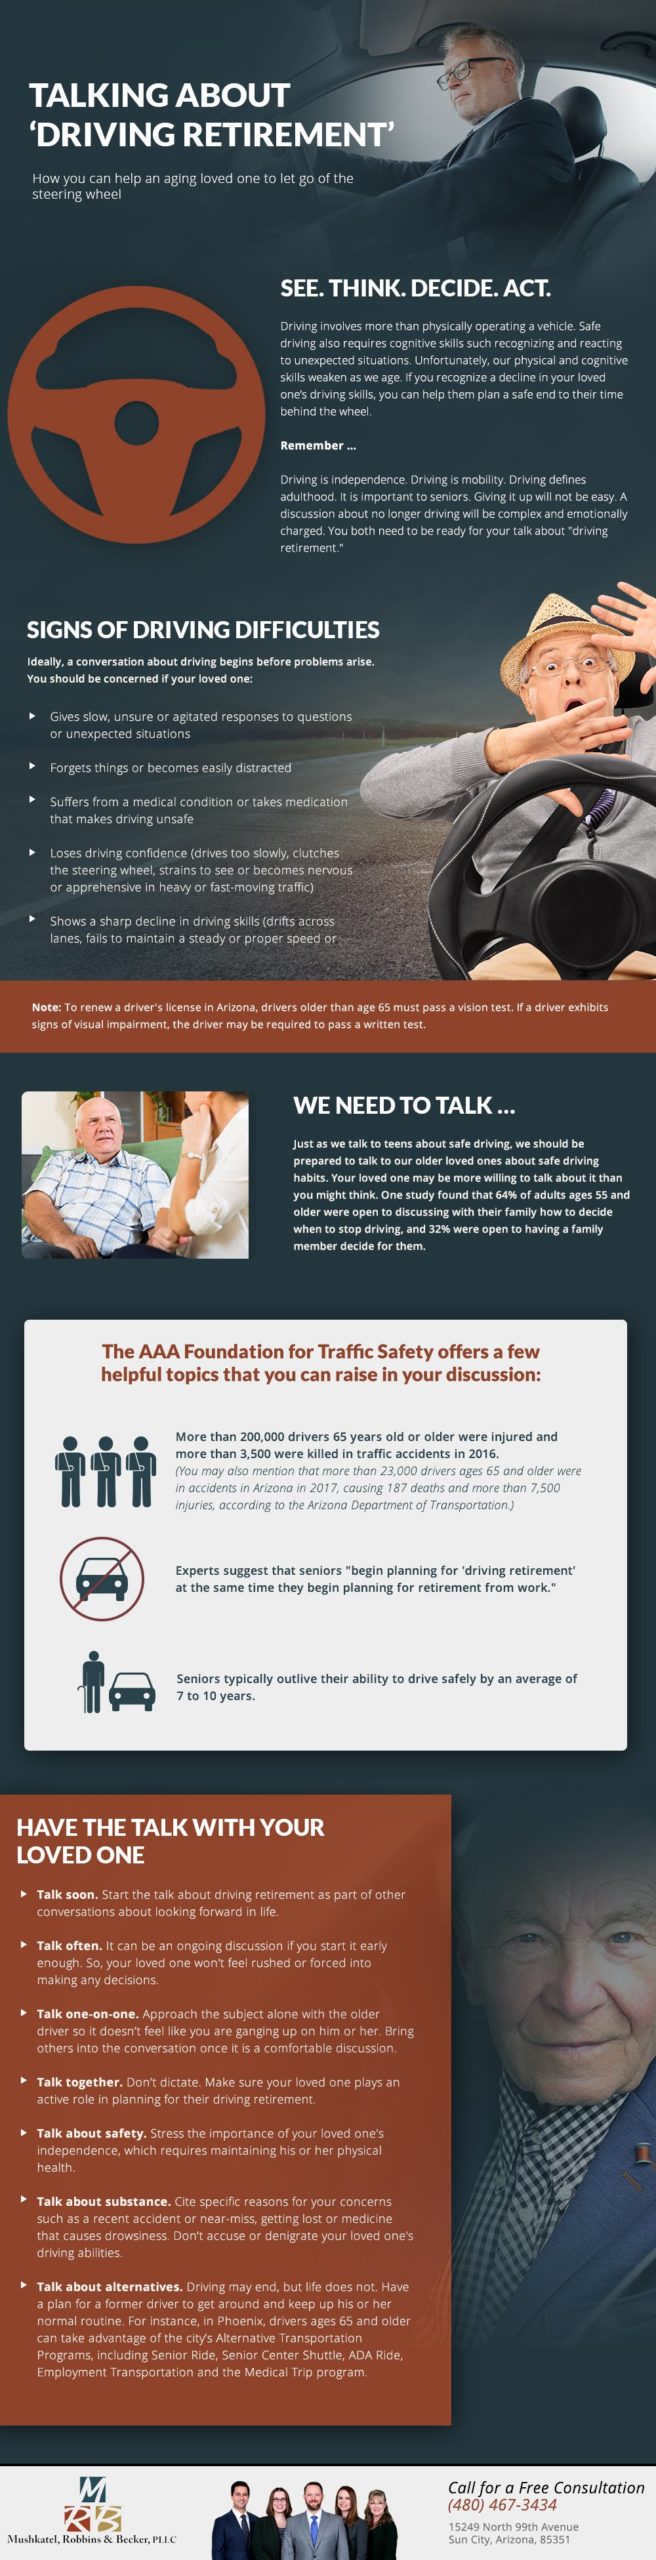 Driving retirement infographic